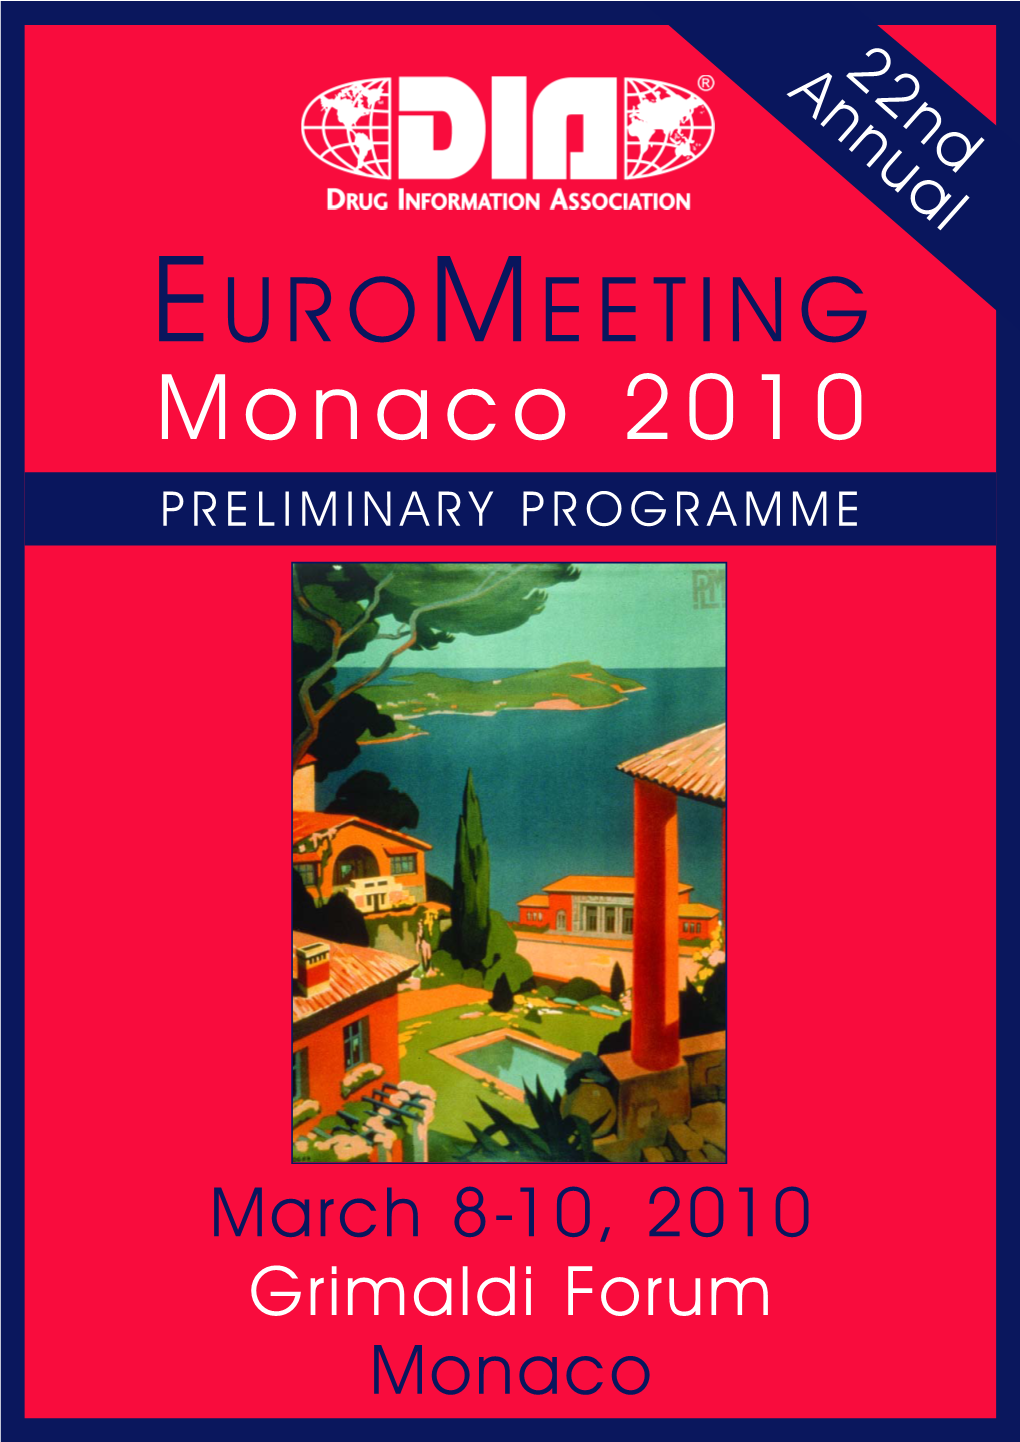 Monaco 2010 PRELIMINARY PROGRAMME